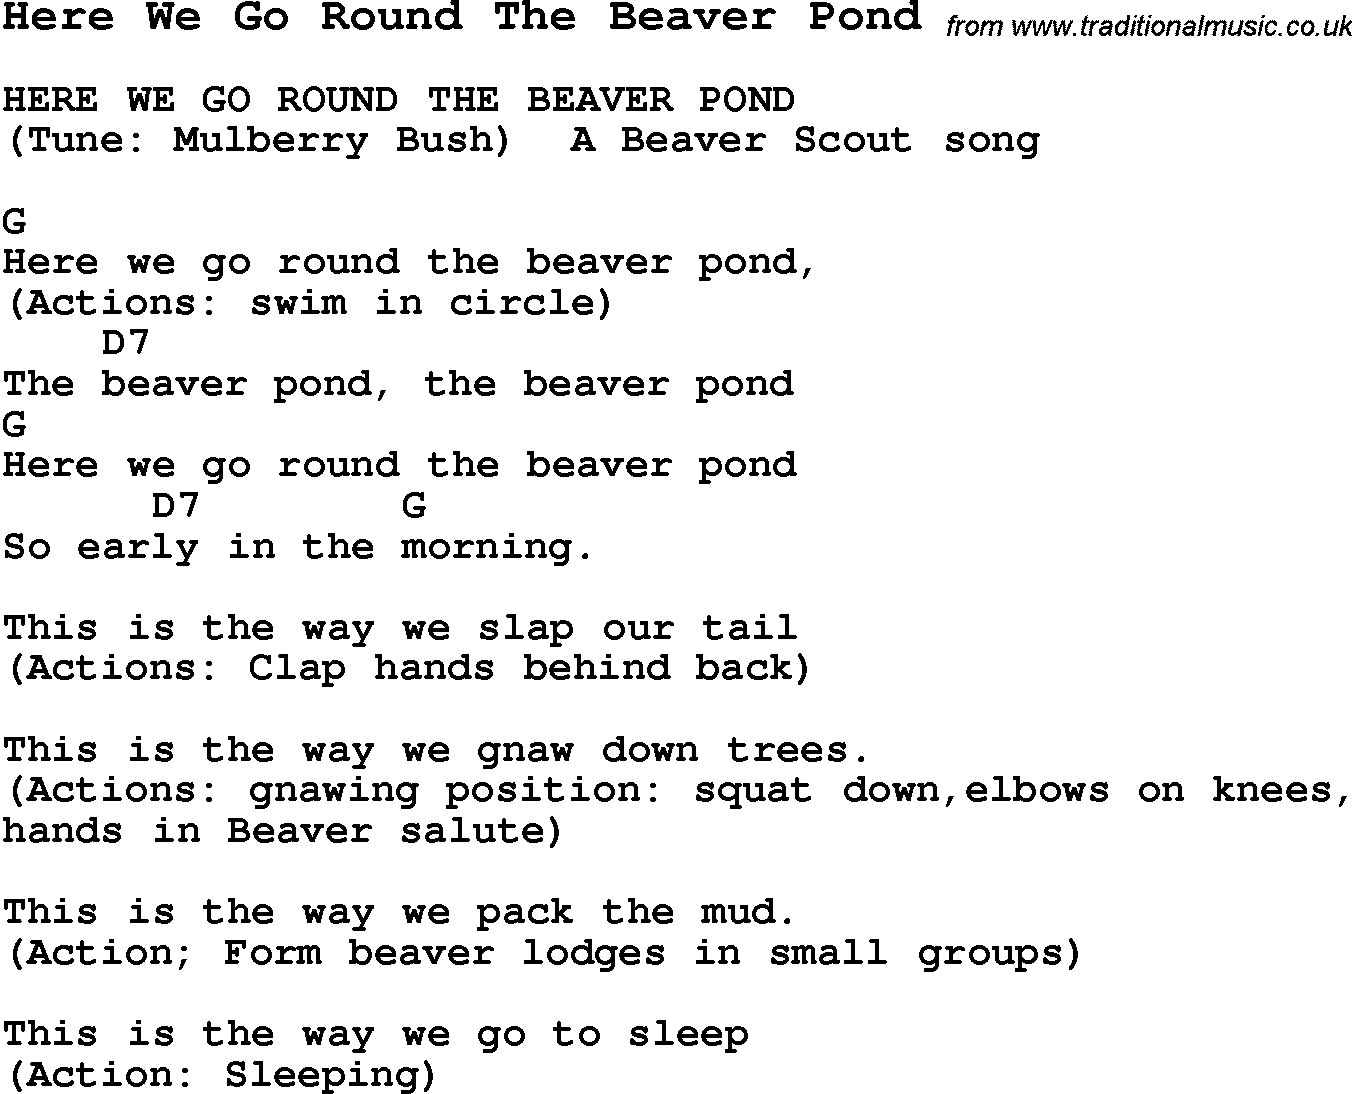 Summer-Camp Song, Here We Go Round The Beaver Pond, with lyrics and chords for Ukulele, Guitar Banjo etc.